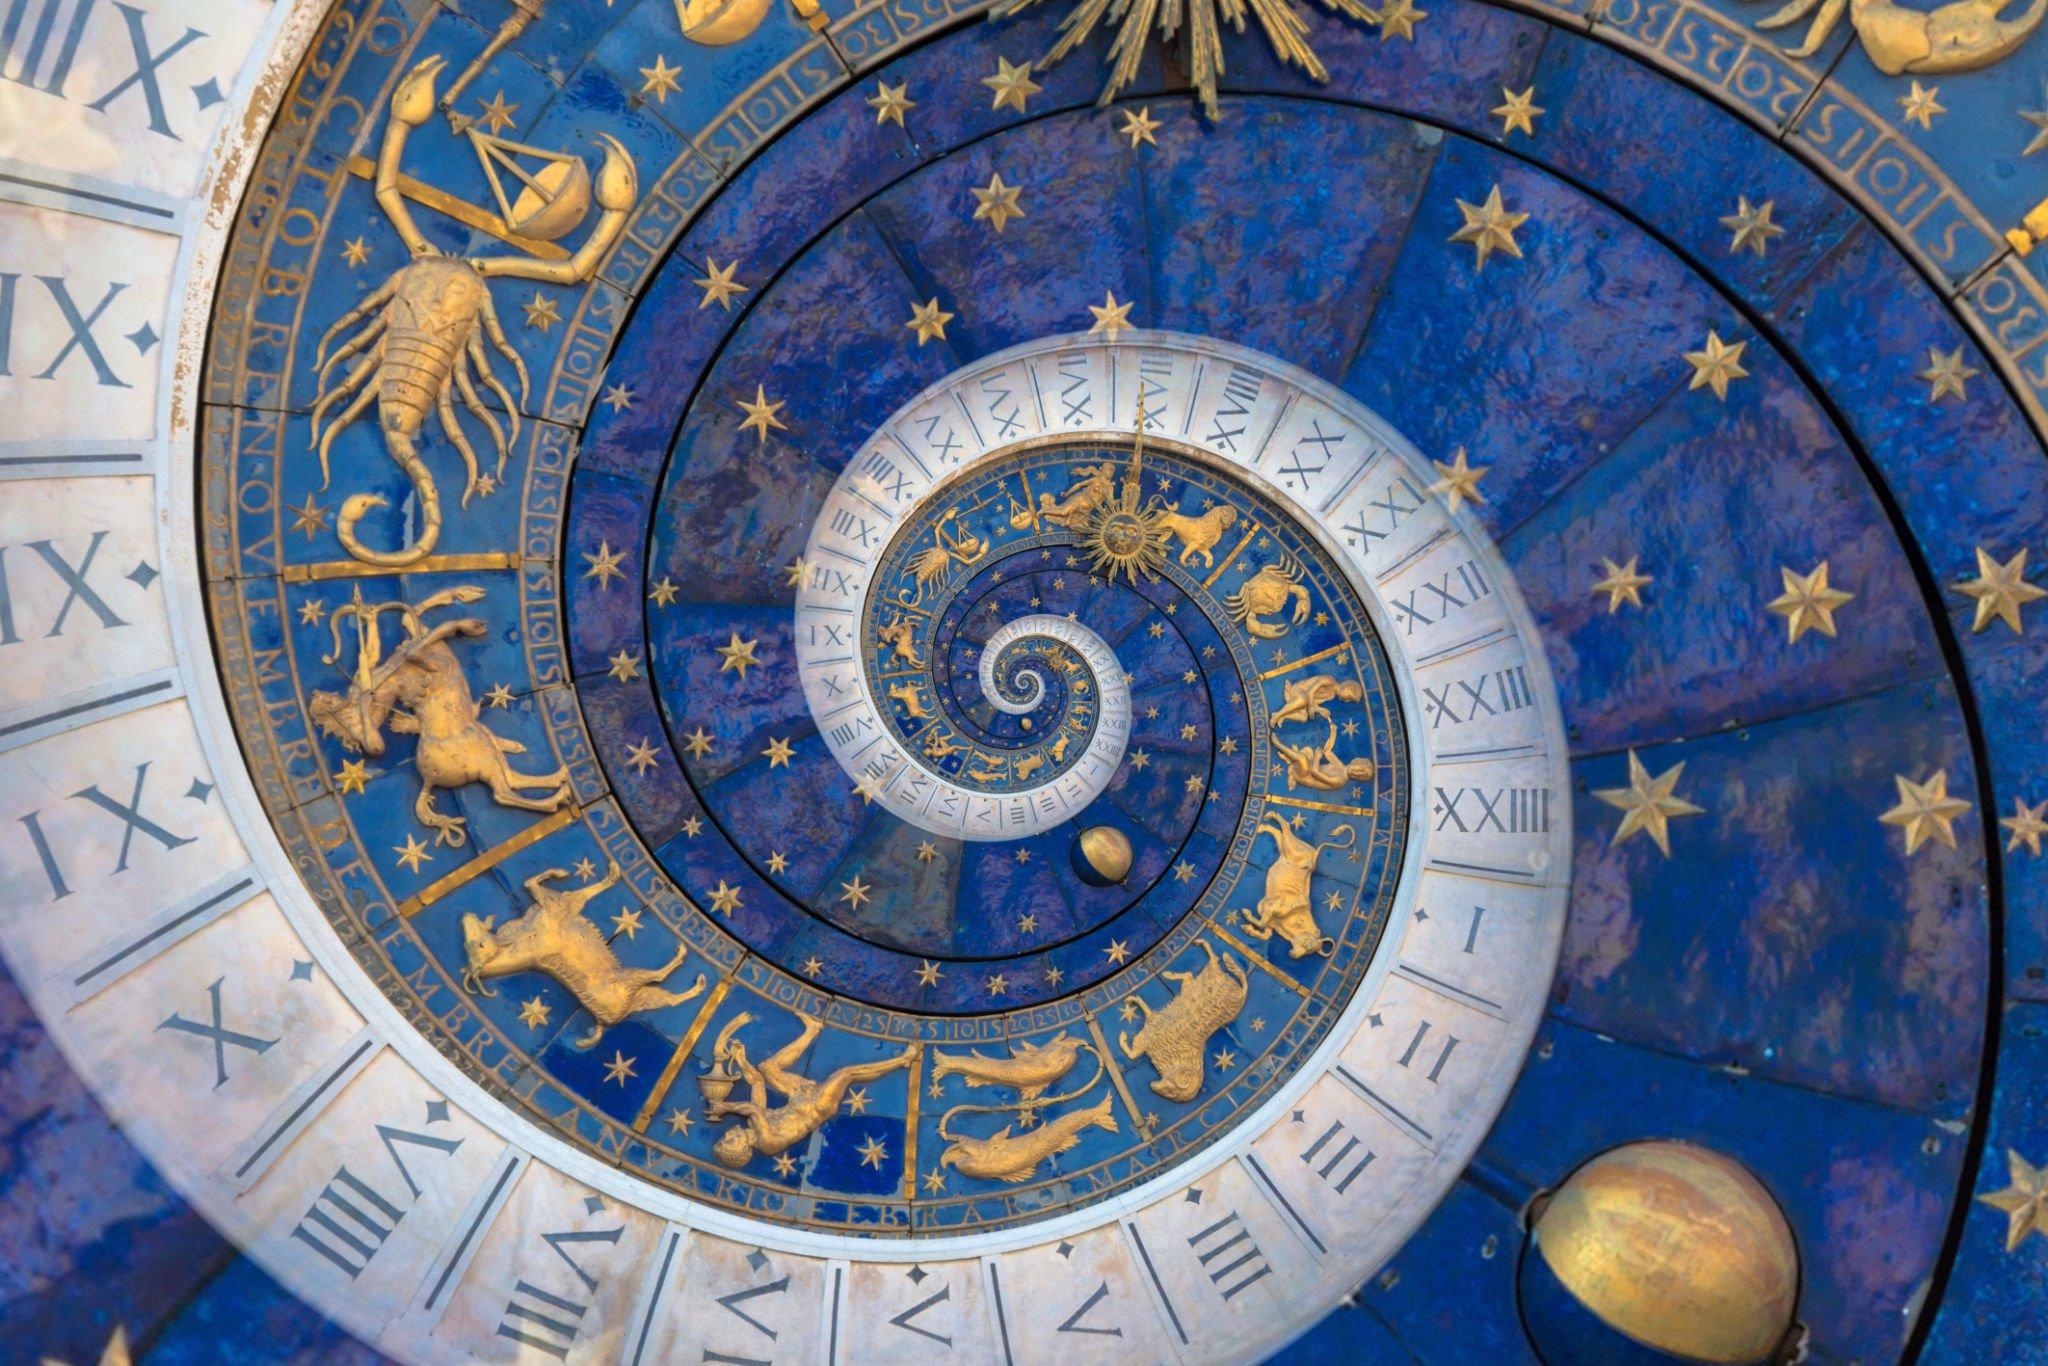 Vesta in Astrology